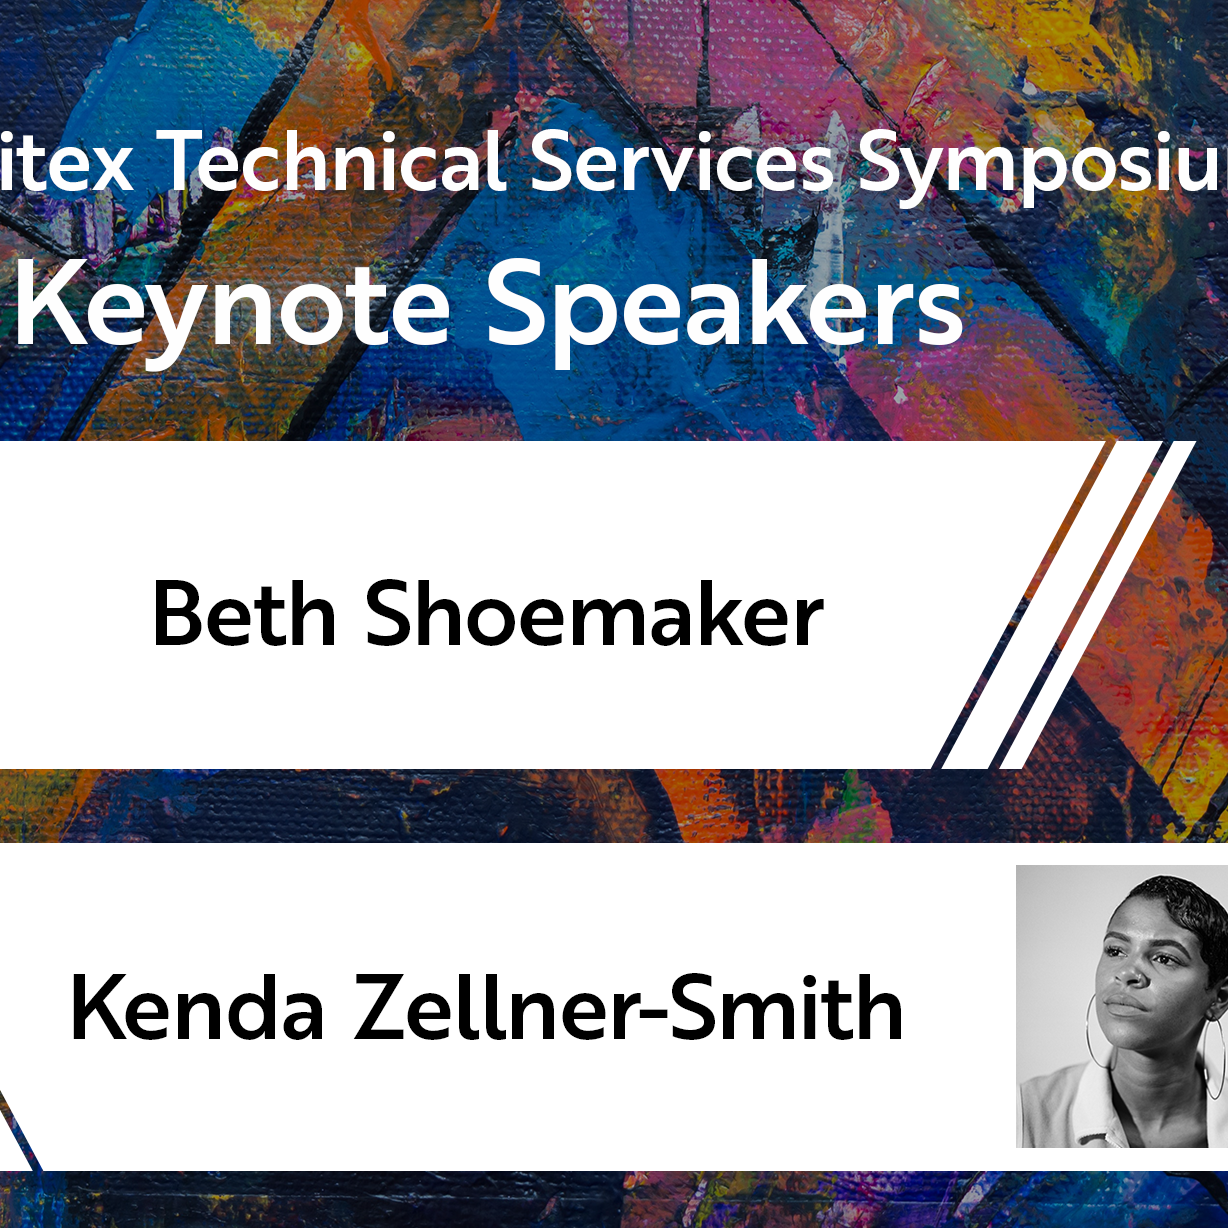 Keynote speaker photos of Beth Shoemaker and Kenda Zellner-Smith